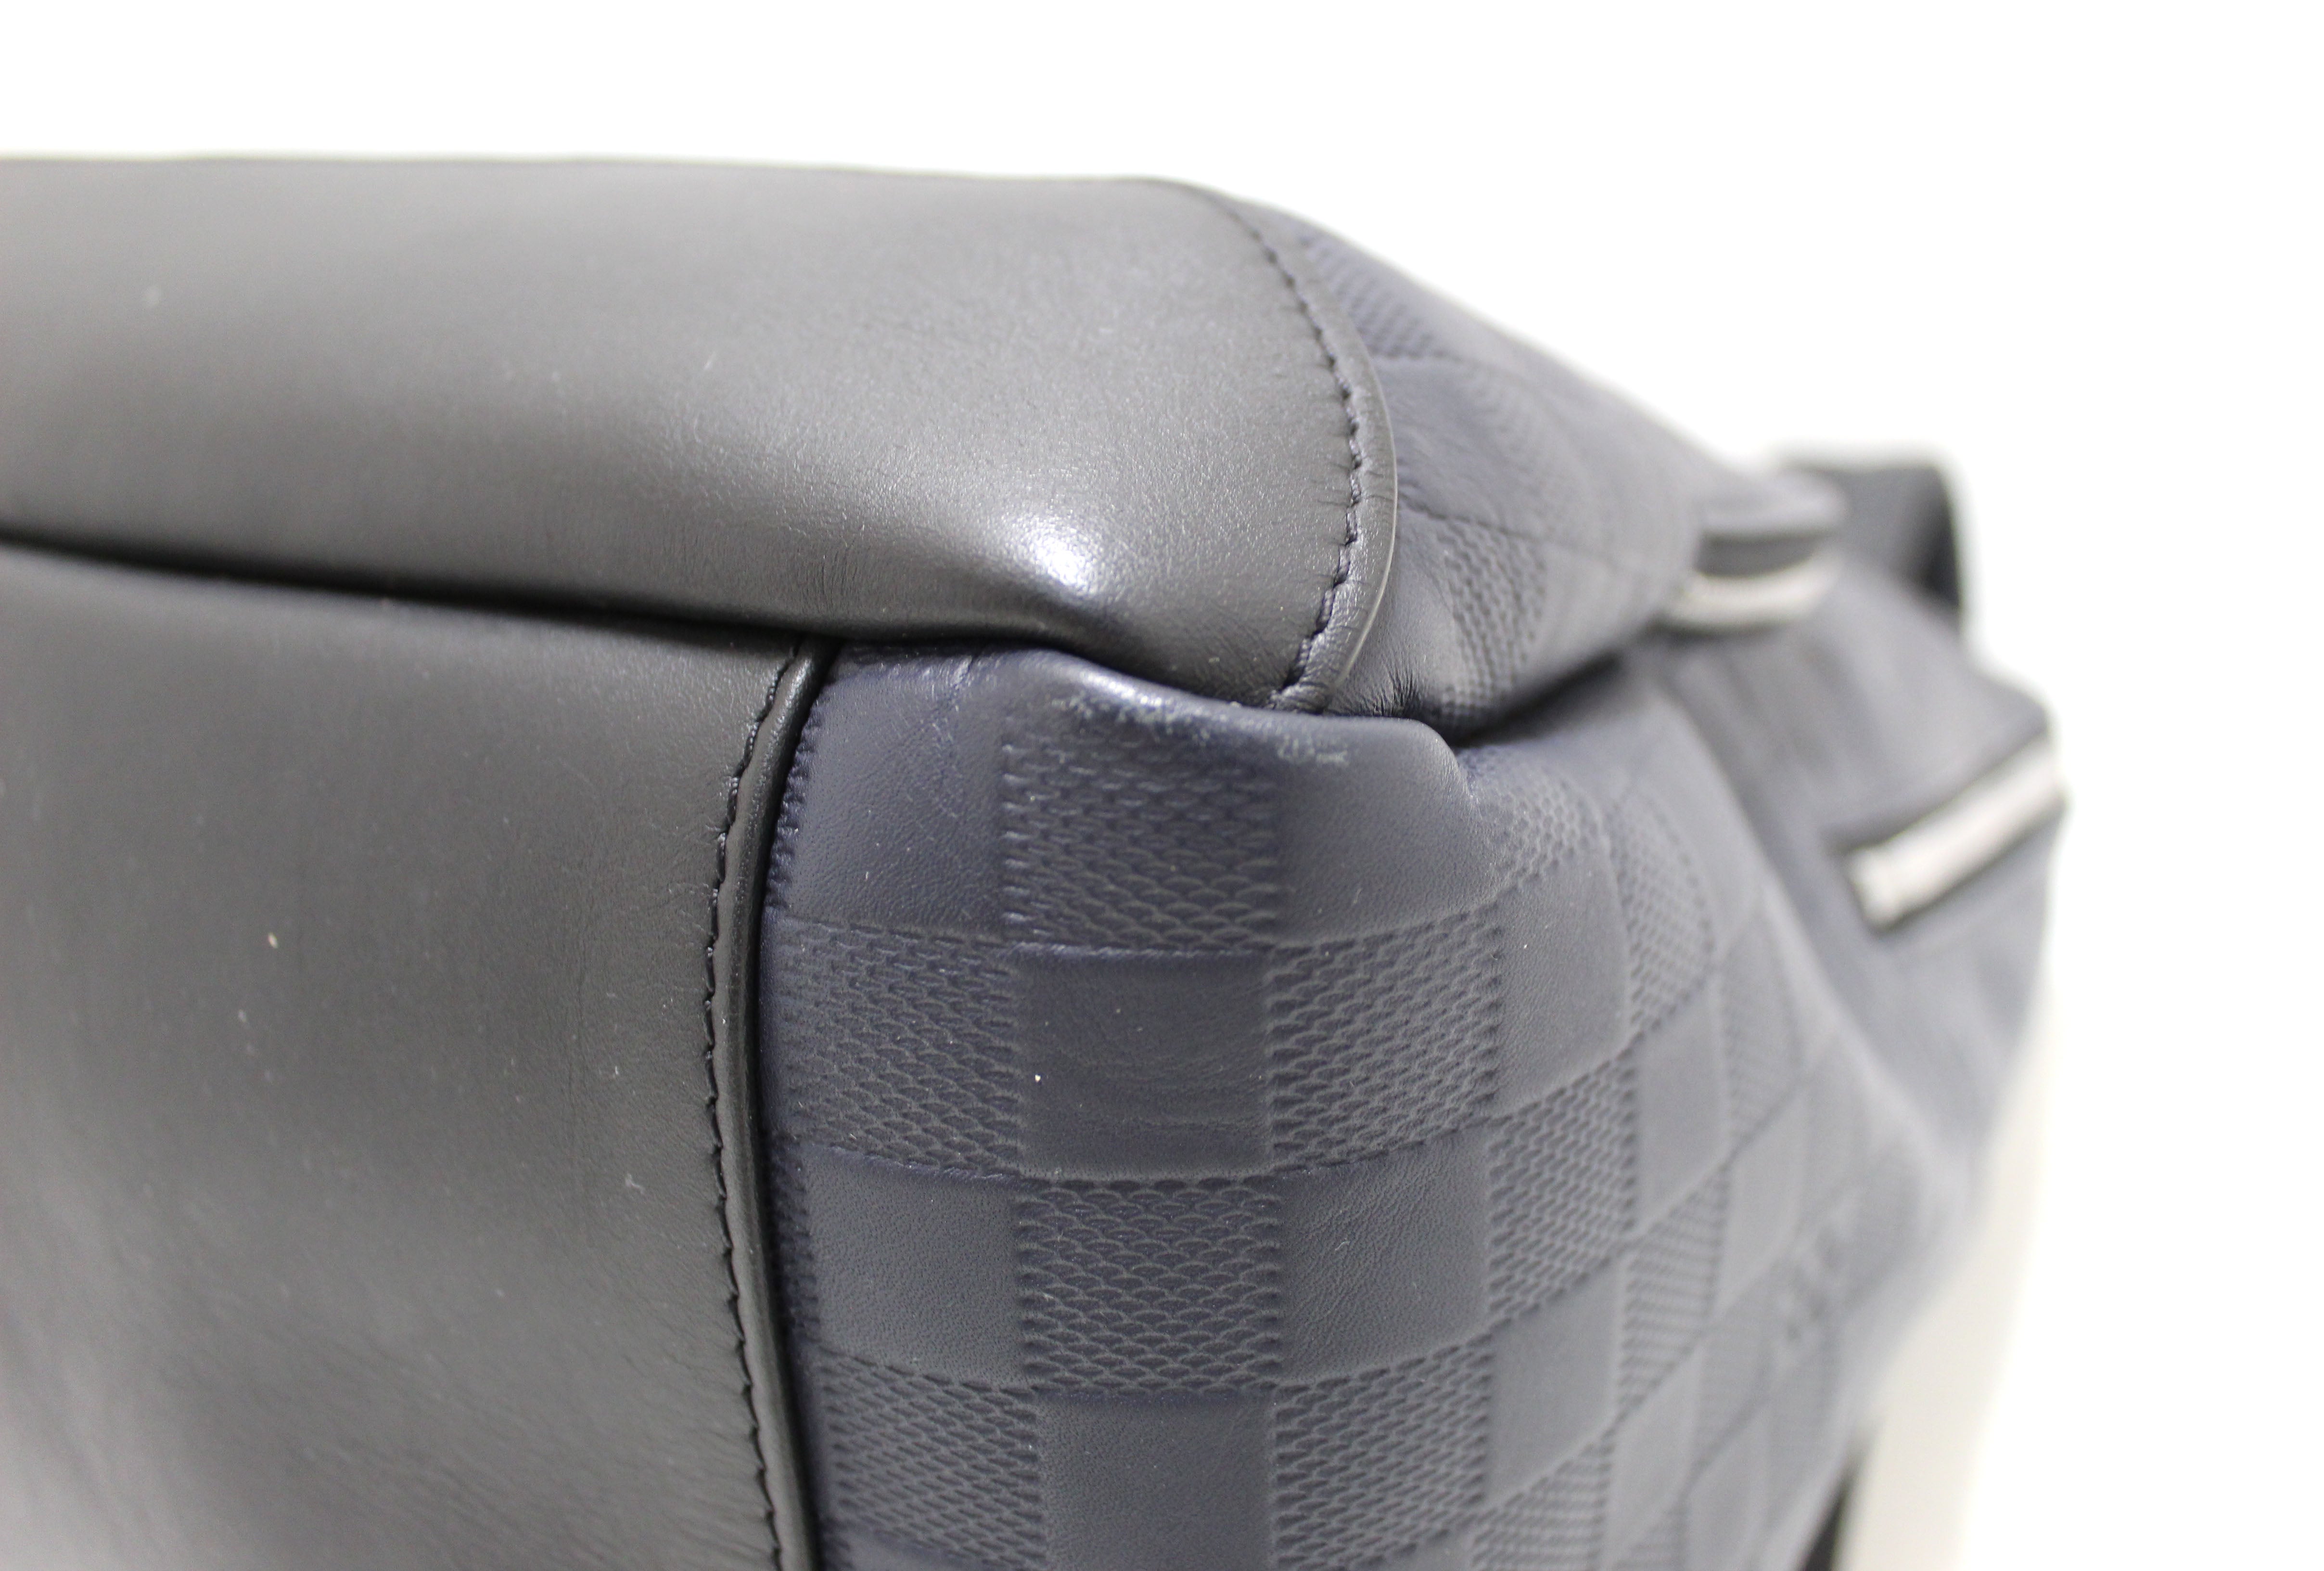 Avenue Backpack Damier Infini Leather - Bags N40501